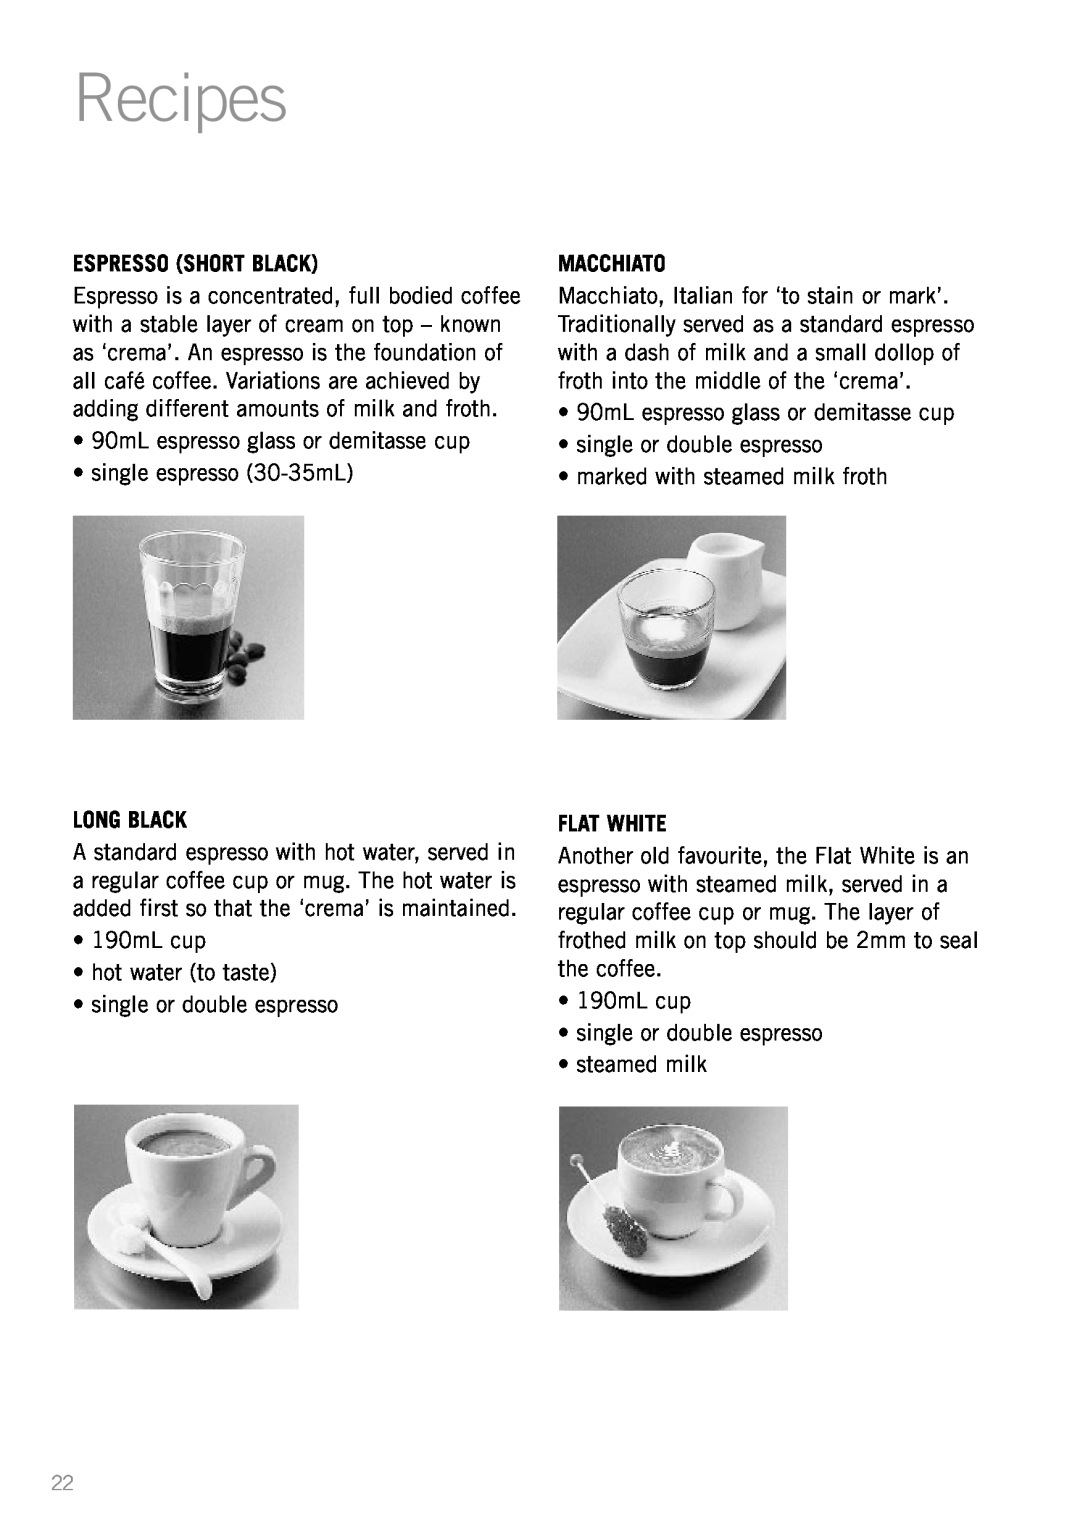 Sunbeam EM2300 manual Recipes, Espresso Short Black, Long Black, Macchiato, Flat White 